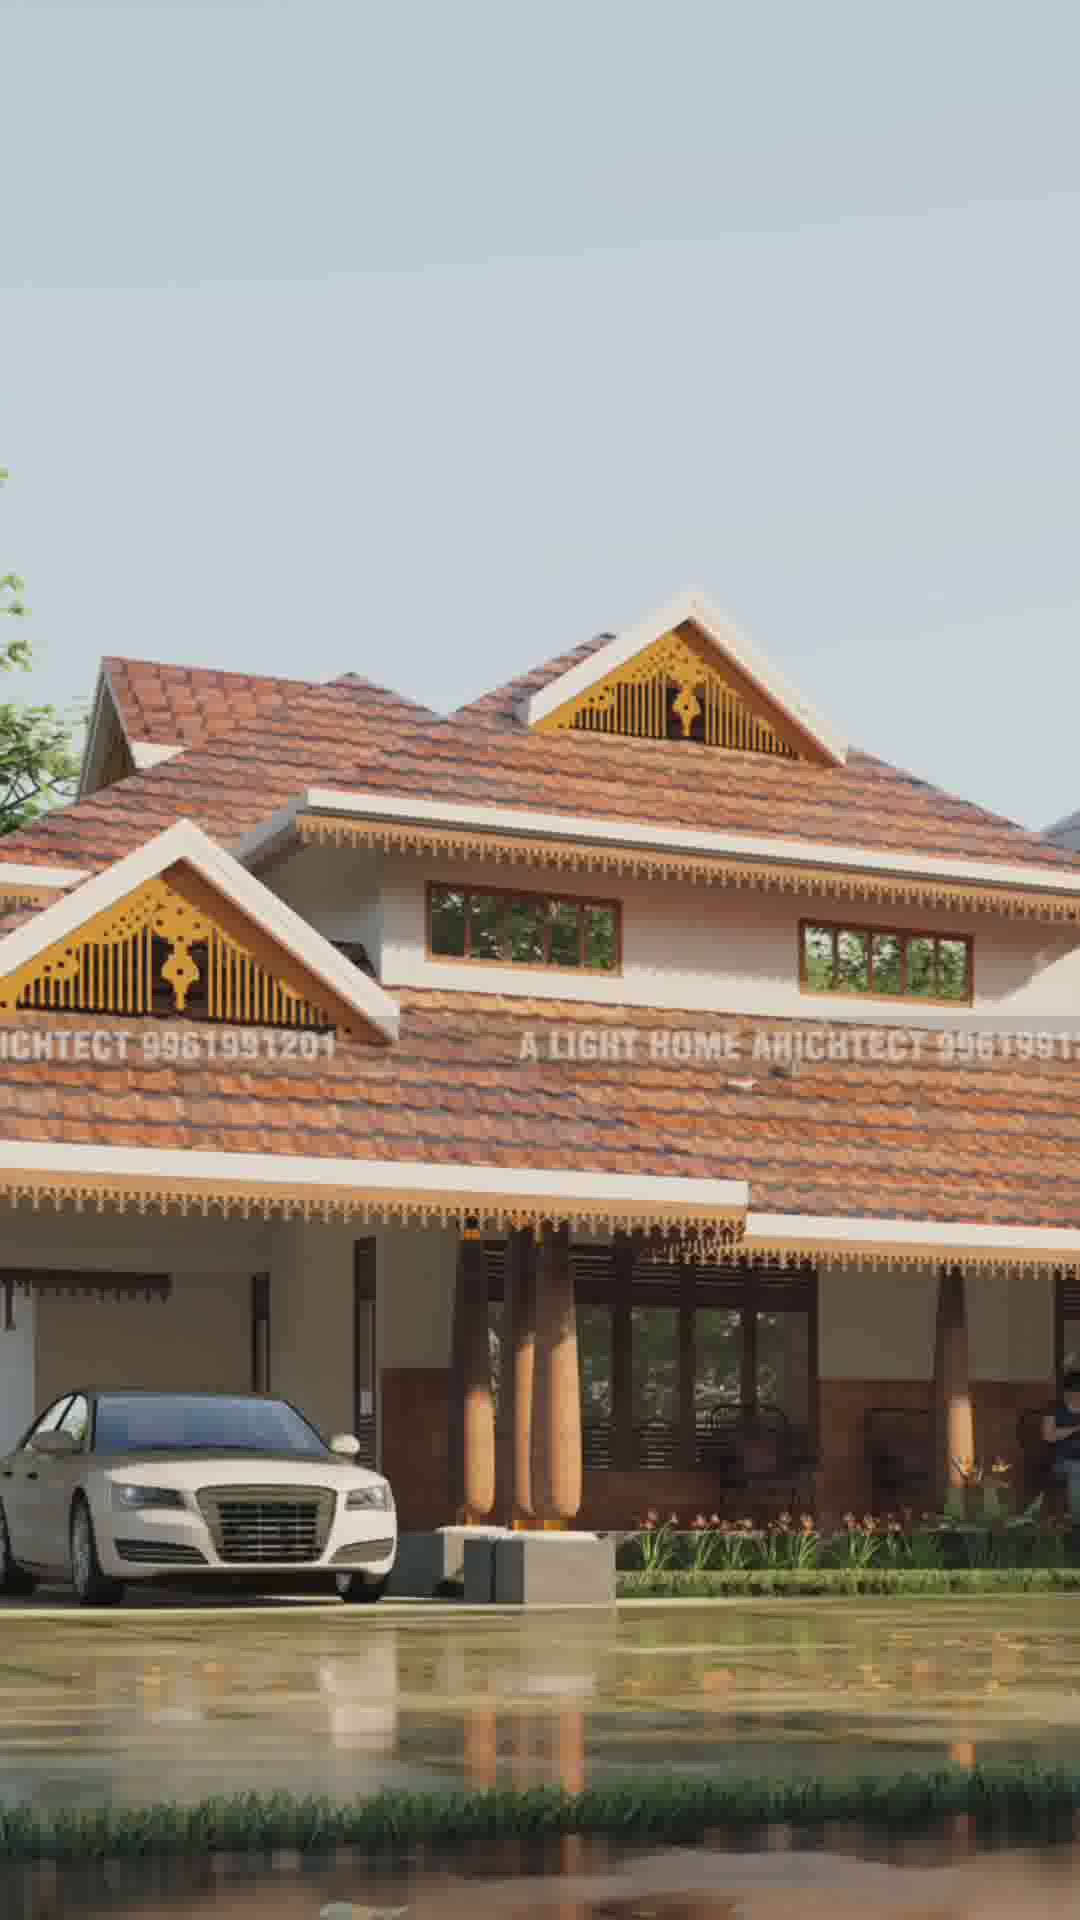 4BHK Traditional House design 🏡
3D ഡിസൈൻ 2500 രൂപ മുതൽ....
വളരെ ചിലവുചുരുക്കി 3D ചെയേണ്ടവർക് മെസ്സേജ്  ചെയ്യു...
996 1991 201

#housedesign #homedesign #traditional #kerala #keralahouse 
 #architecture #architecturelovers #architecturedesign #archi #keralahousedesign #3dhomedesign #house #housedesign #traditional #traditionalhouse #traditionalhousedesingkerala #keralatraditional #keralaplan #plan #3bhkhouse 
 #keralahousedesign #kerala #house #homedesign #3dhousedesign #plan #3dhousedesigns #3d #traditionalhousedesingkerala #naalukettuveedu #naalukettu #naalukettuveedukerala #Naalukett #nadumuttam #cortiyard #keralastylehousestylehouse #naalu #veedu #kerala #Wayanad #Kasargod #Kannur #Kozhikode #Malappuram #Thrissur #Palakkad #Kottayam #Ernakulam #kochiindia #india #Alappuzha #Kottayam #kattapana #Idukki #Pathanamthitta #Thiruvananthapuram #Kollam #tamilnadu #50LakhHouse #4BHKHouse #3dplan #alighthomearchitect #alighthome #charupadi #dormerwindow #porch #waterbody #thuvanam #pillar